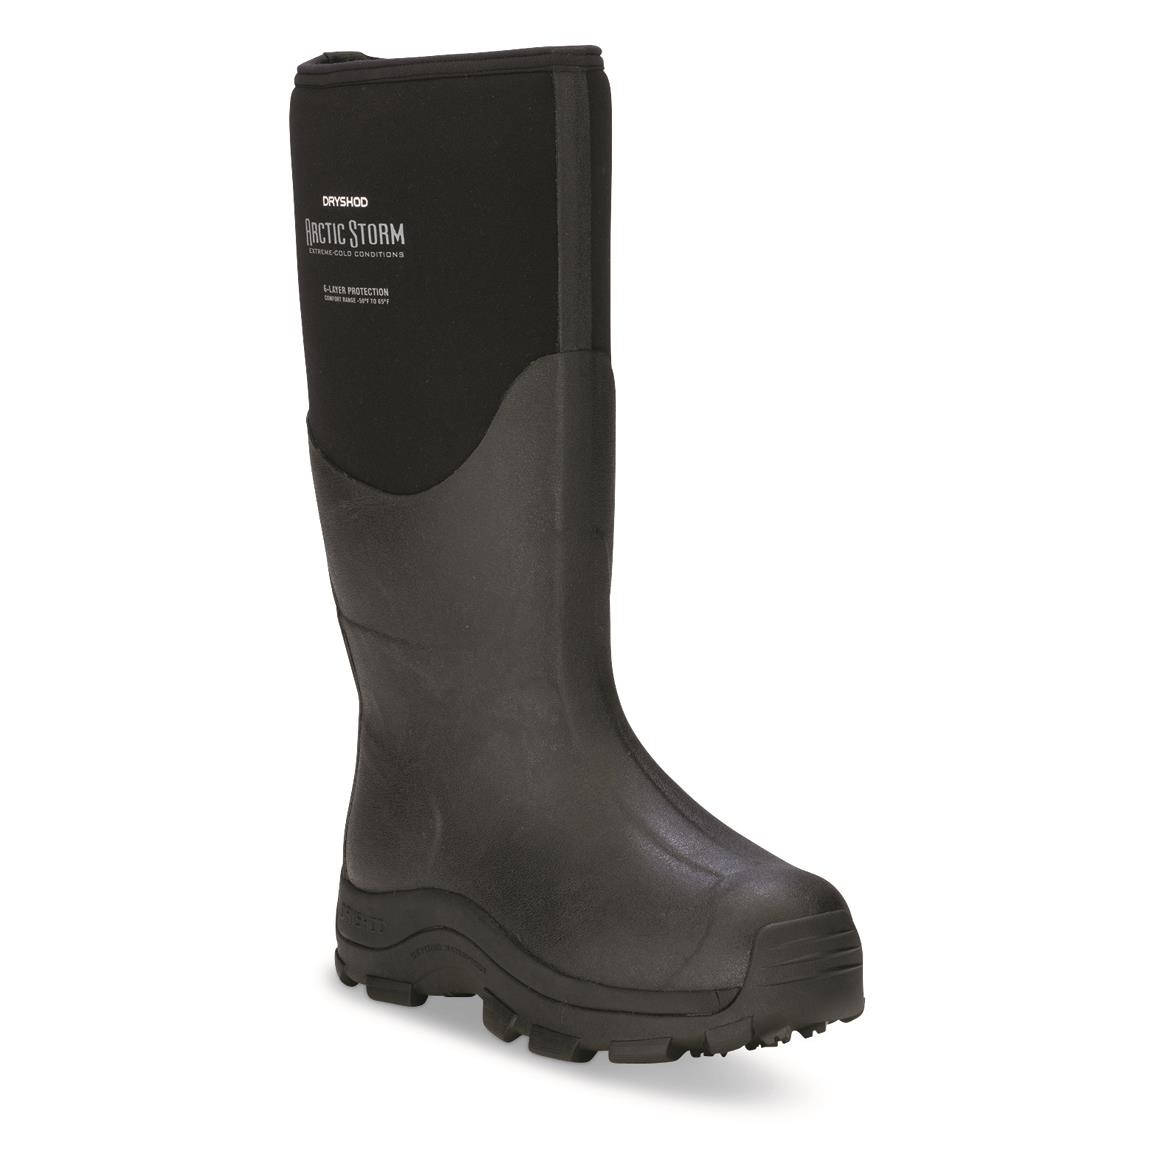 Beschikbaar naald brandwonden DryShod Men's Arctic Storm High Rubber Winter Boots, -50°F - 708376, Rubber  & Rain Boots at Sportsman's Guide